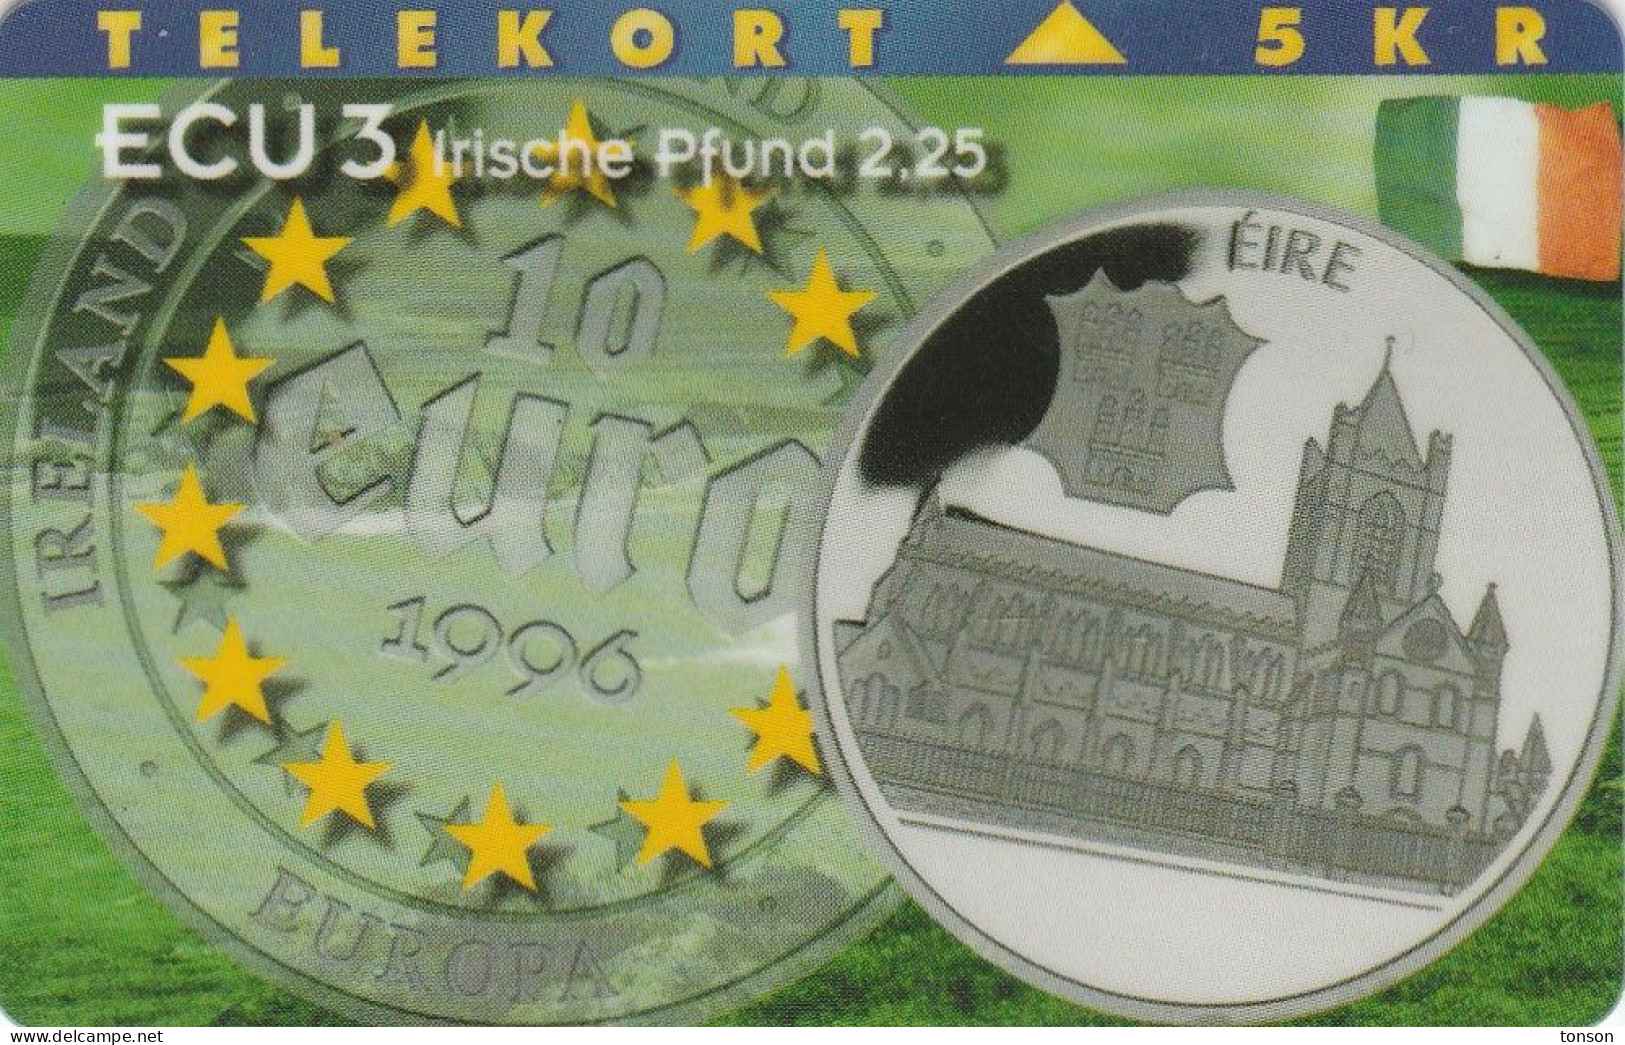 Denmark, P 098, Ecu - Ireland, Flag, Mint Only 1000 Issued, 2 Scans. - Danemark